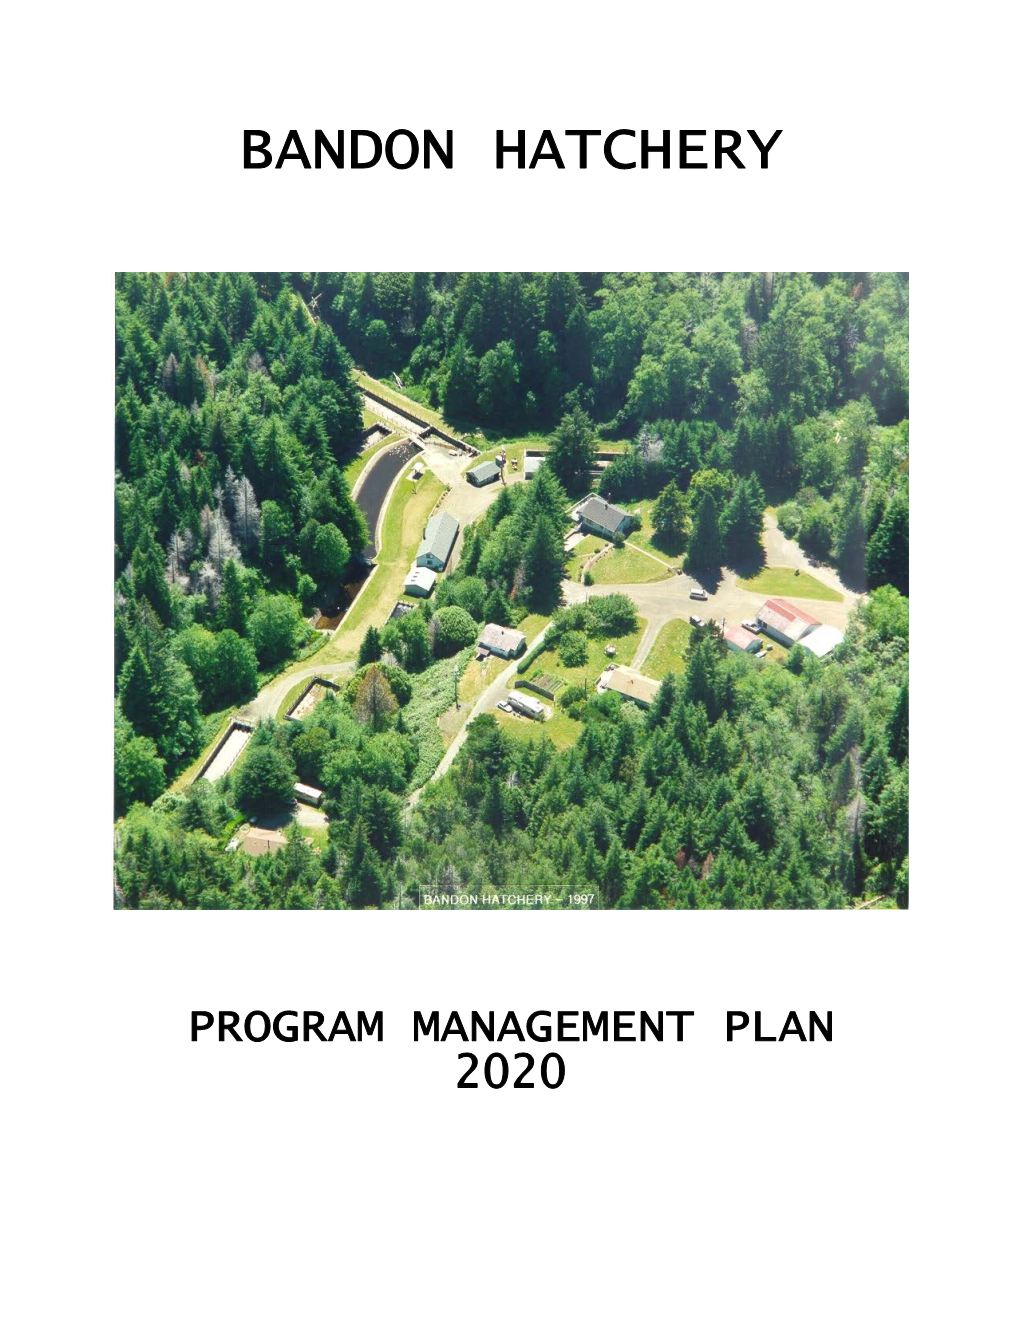 Bandon Hatchery